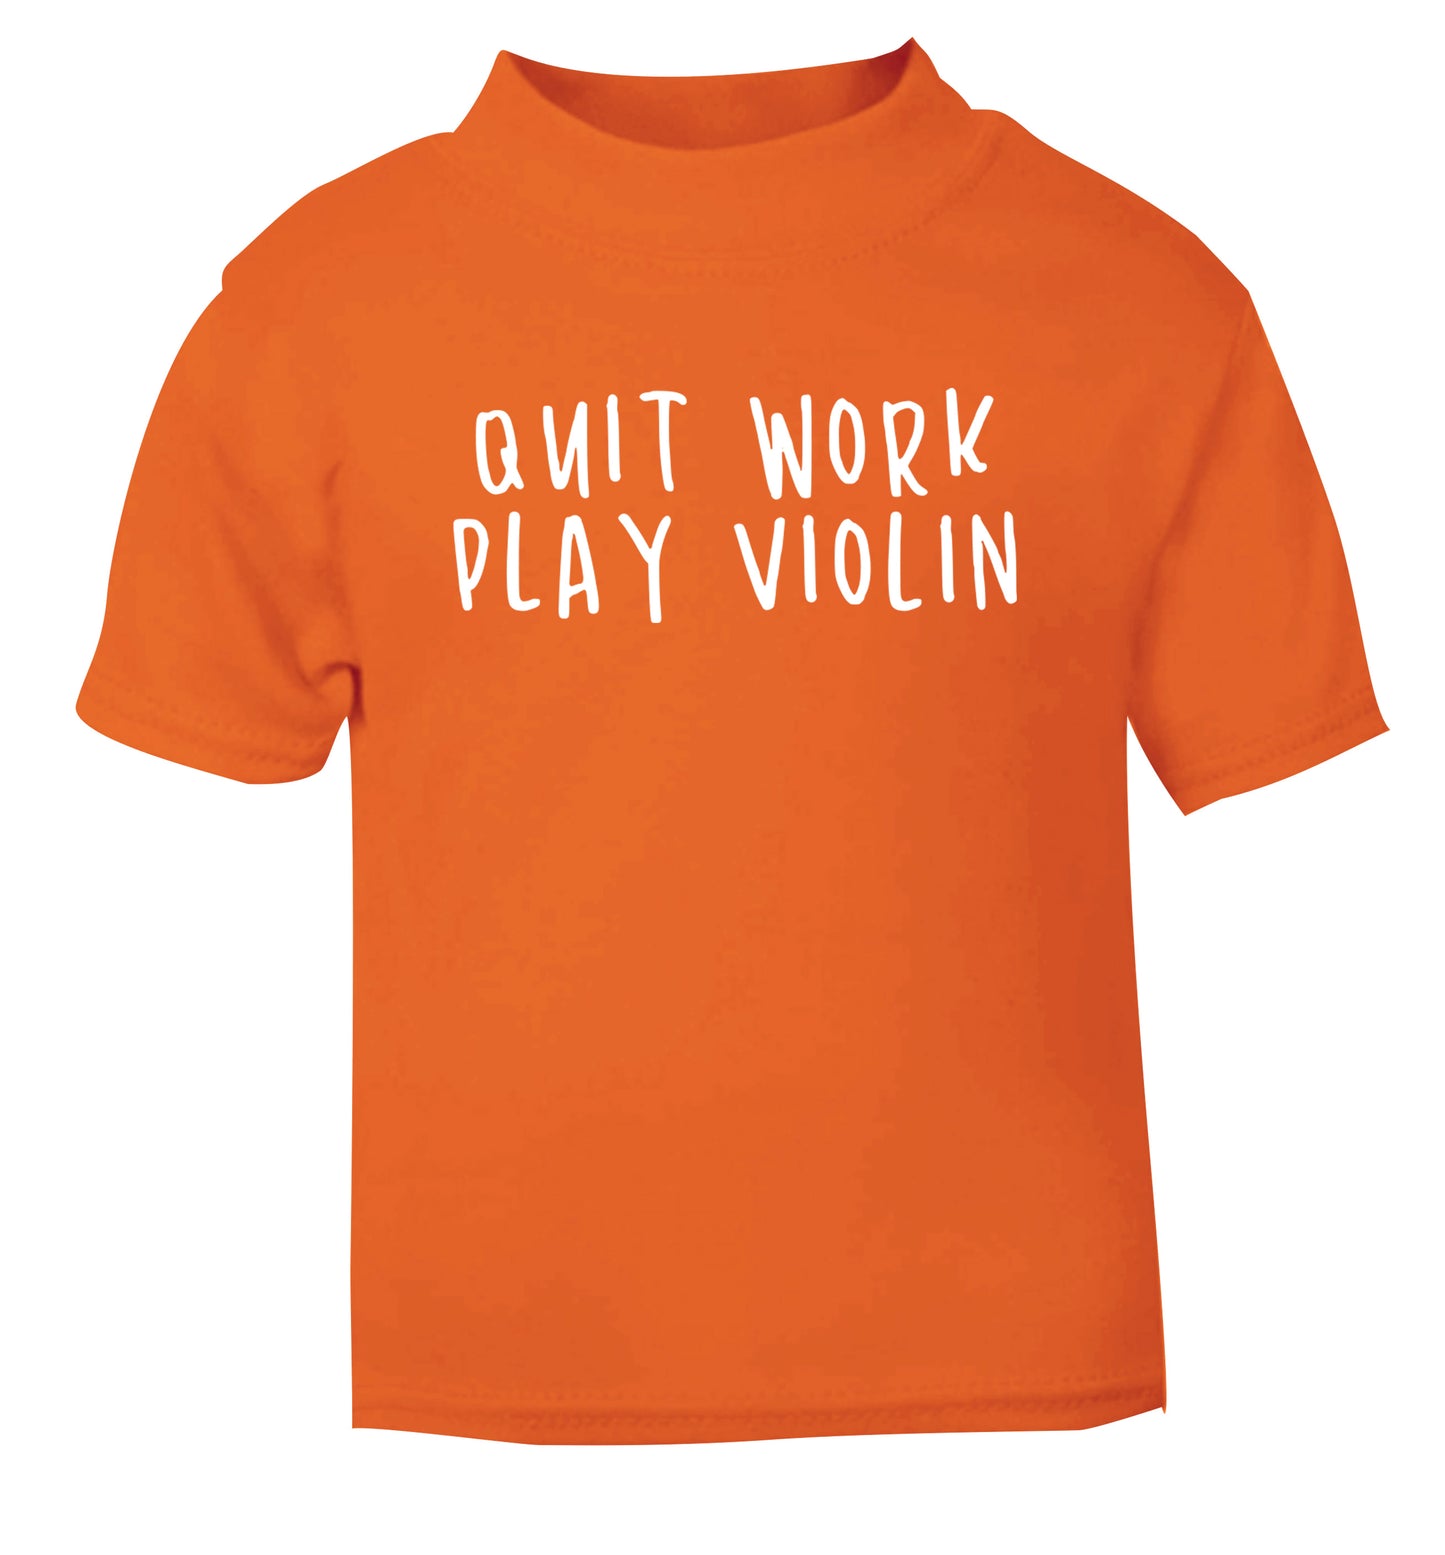 Quit work play violin orange Baby Toddler Tshirt 2 Years